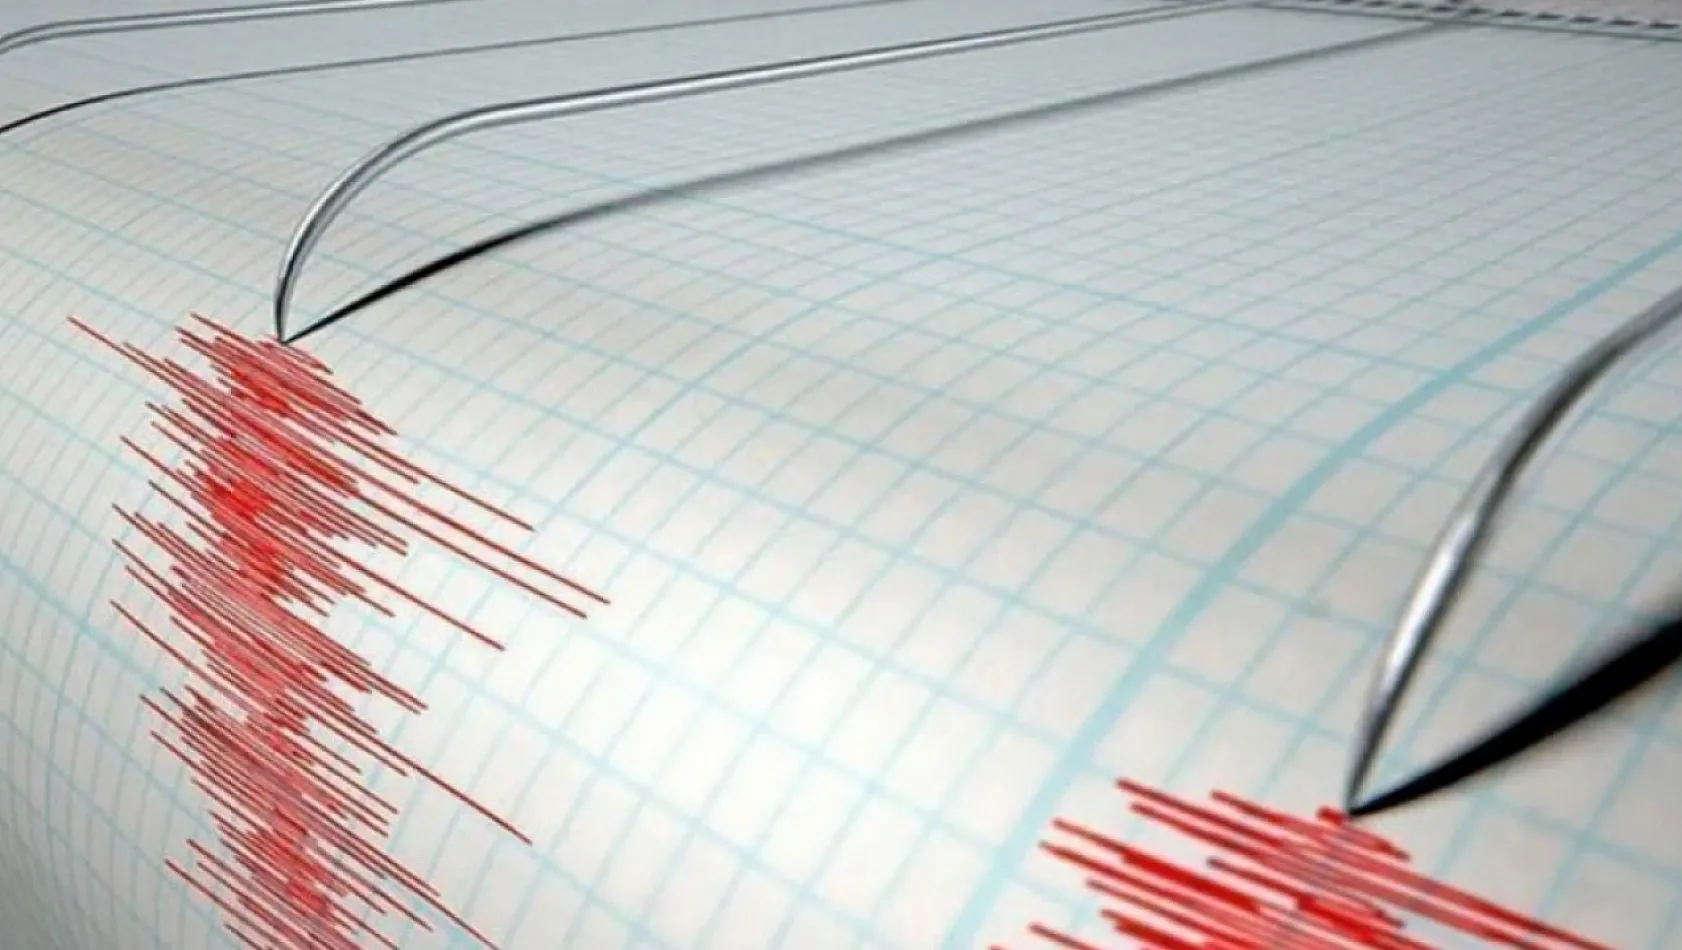 Japonya'da Peşpeşe 2 Büyük Deprem Oldu